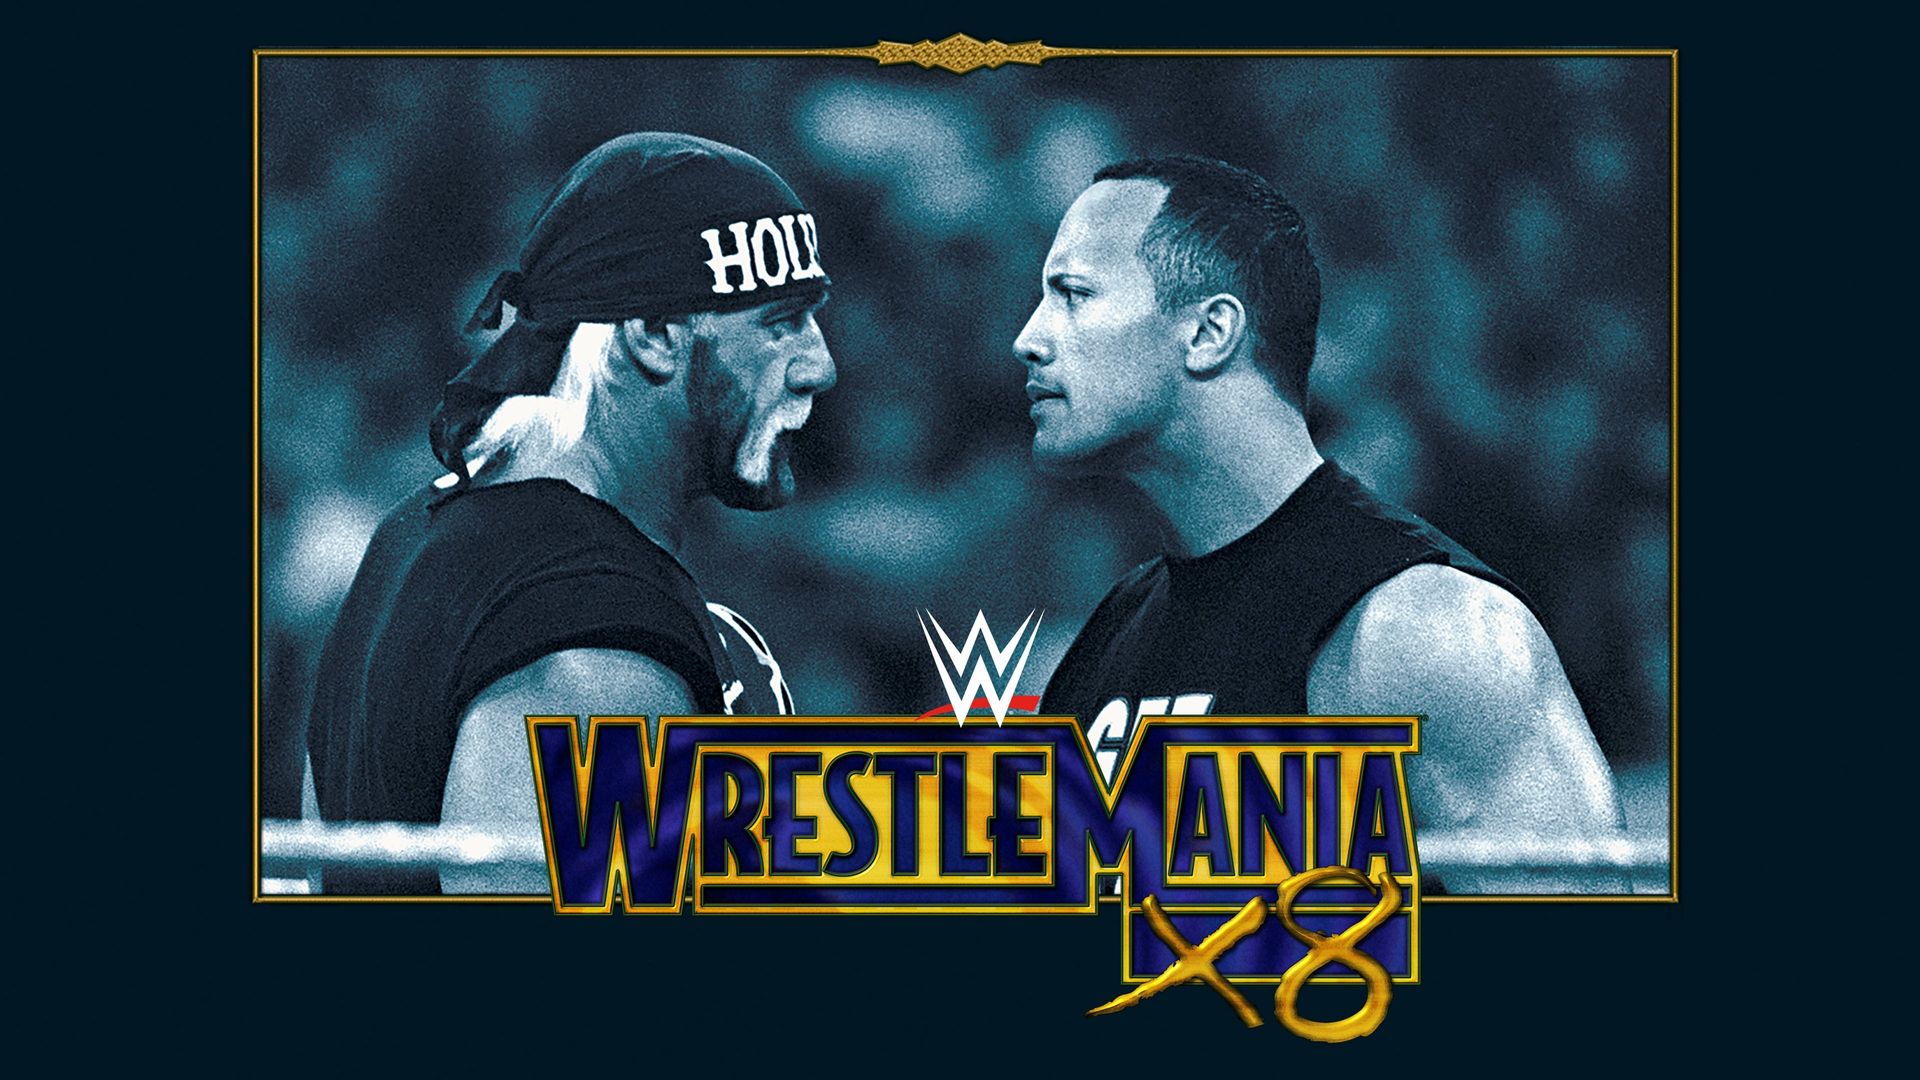 WrestleMania X8 background